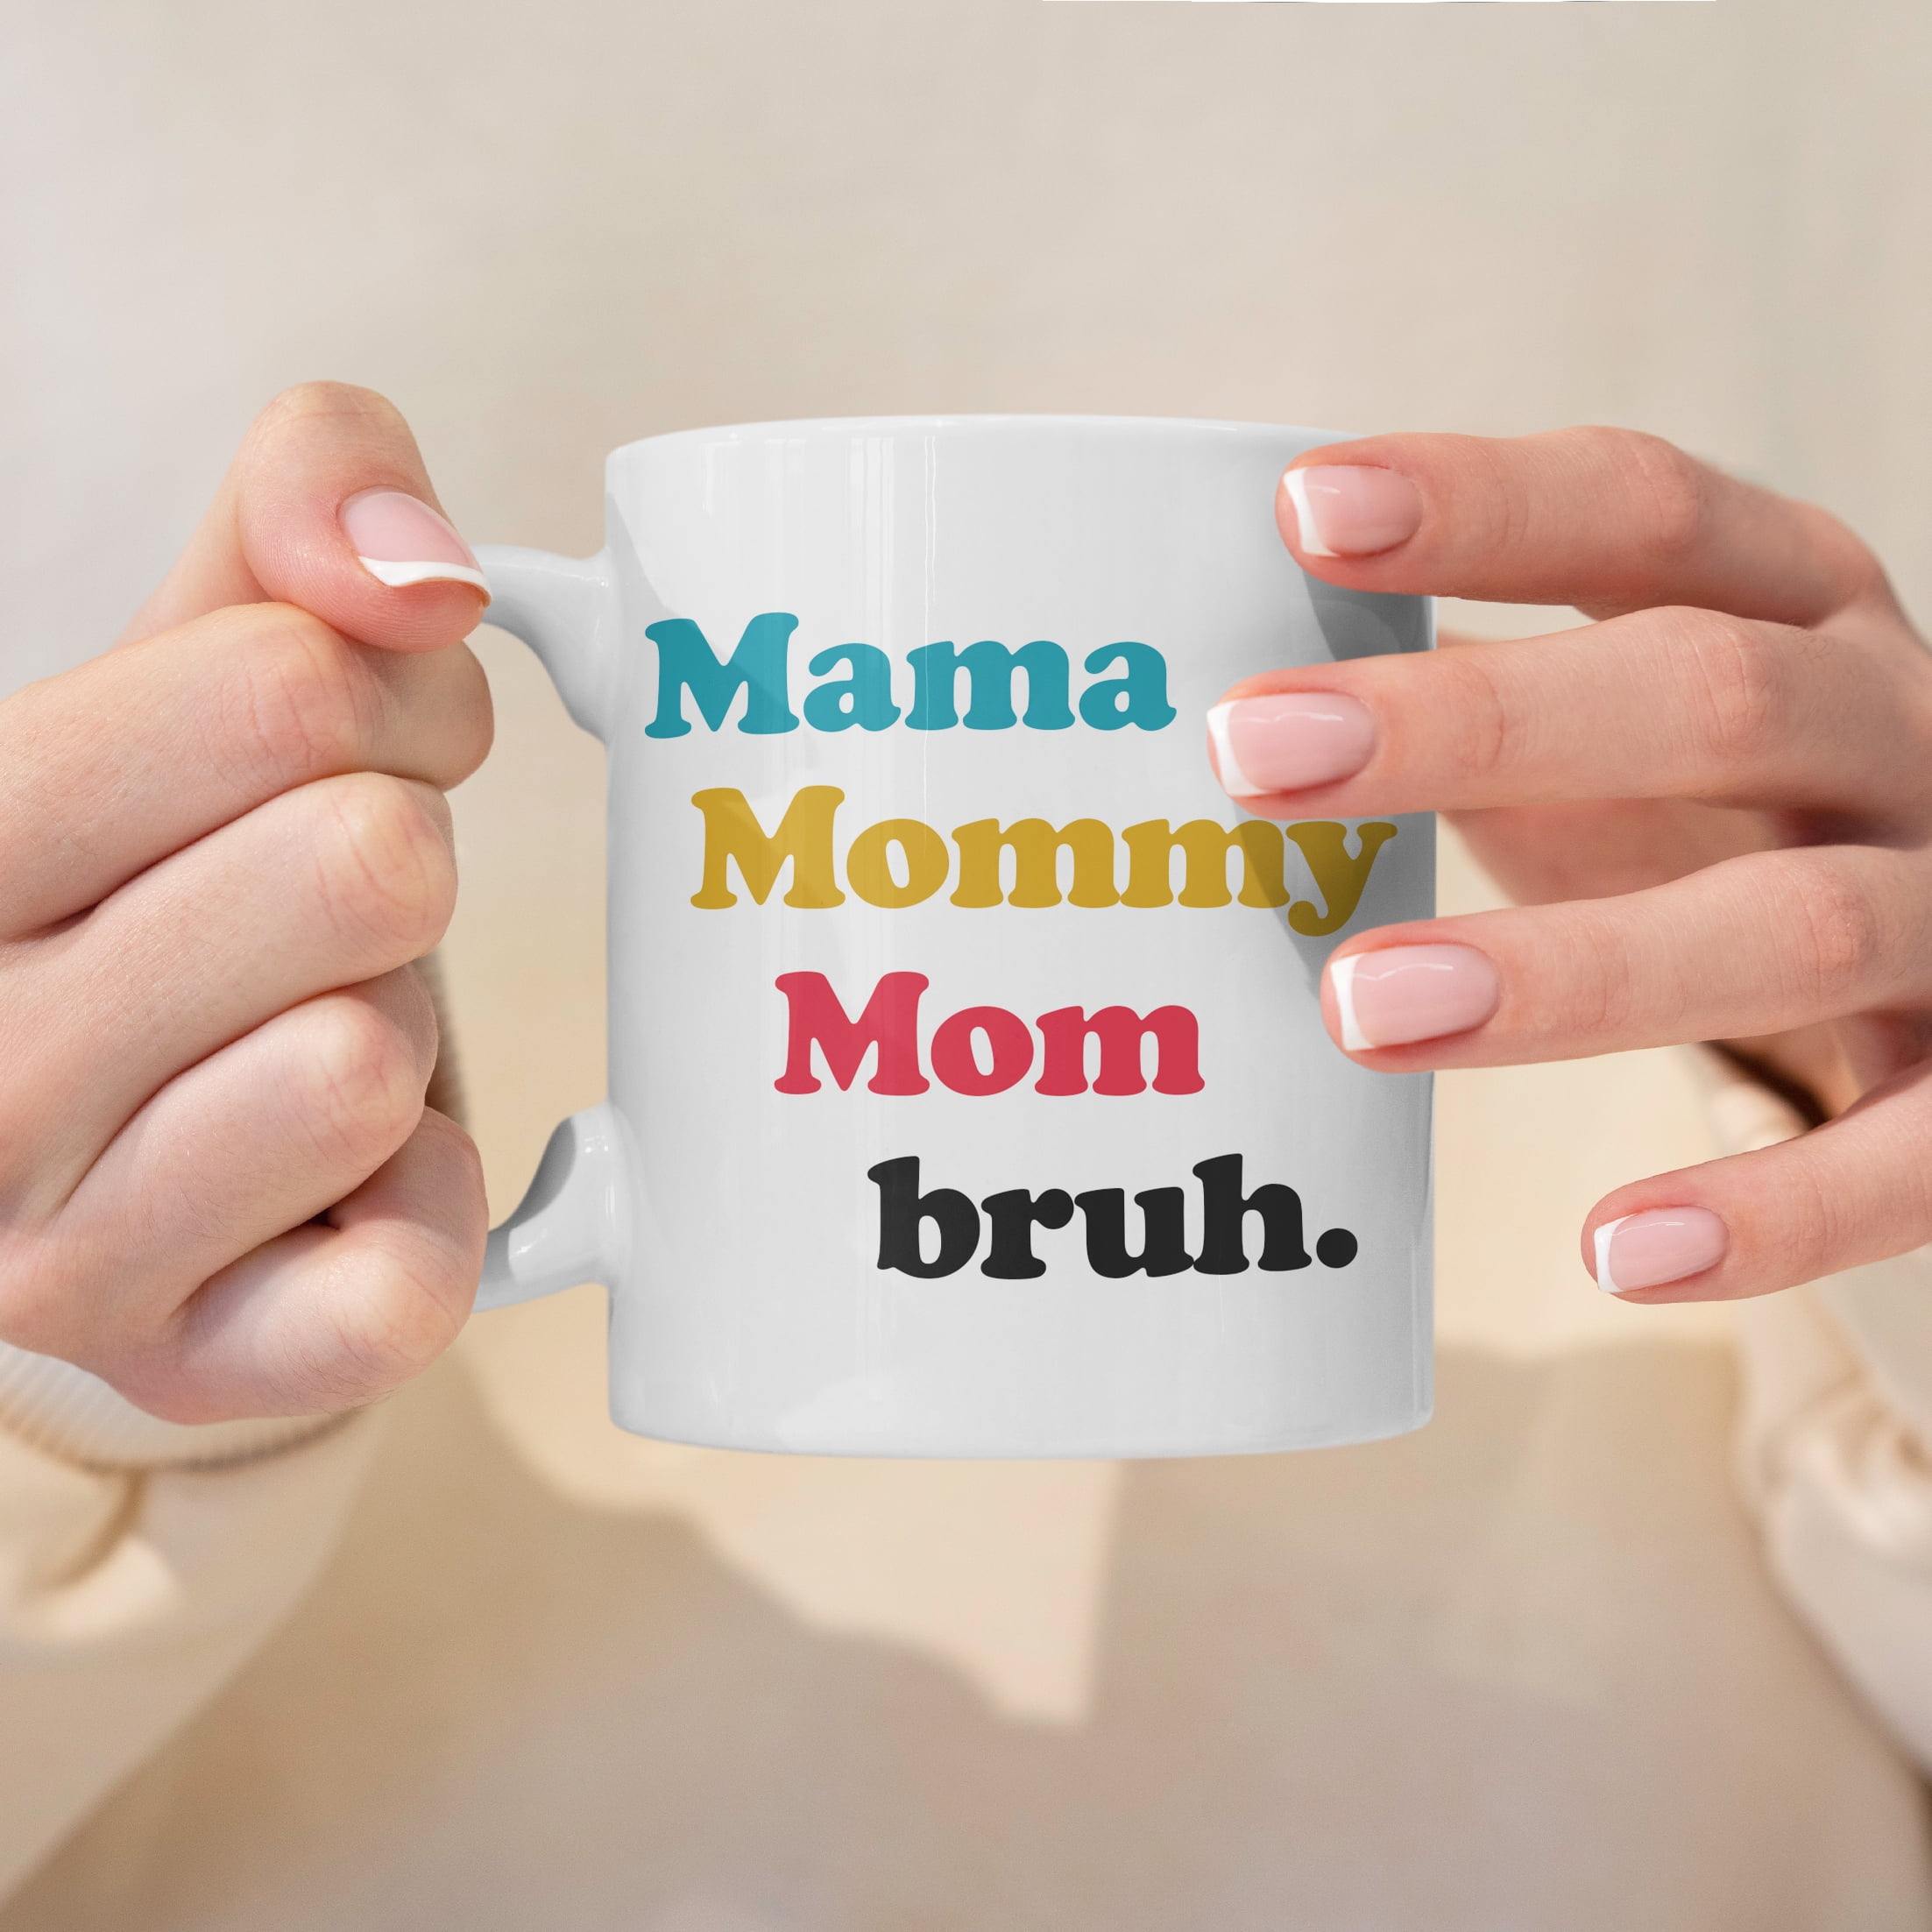 Mother's Day Skinny Tumbler, Mama, Mommy, Mom, Bruh Mug